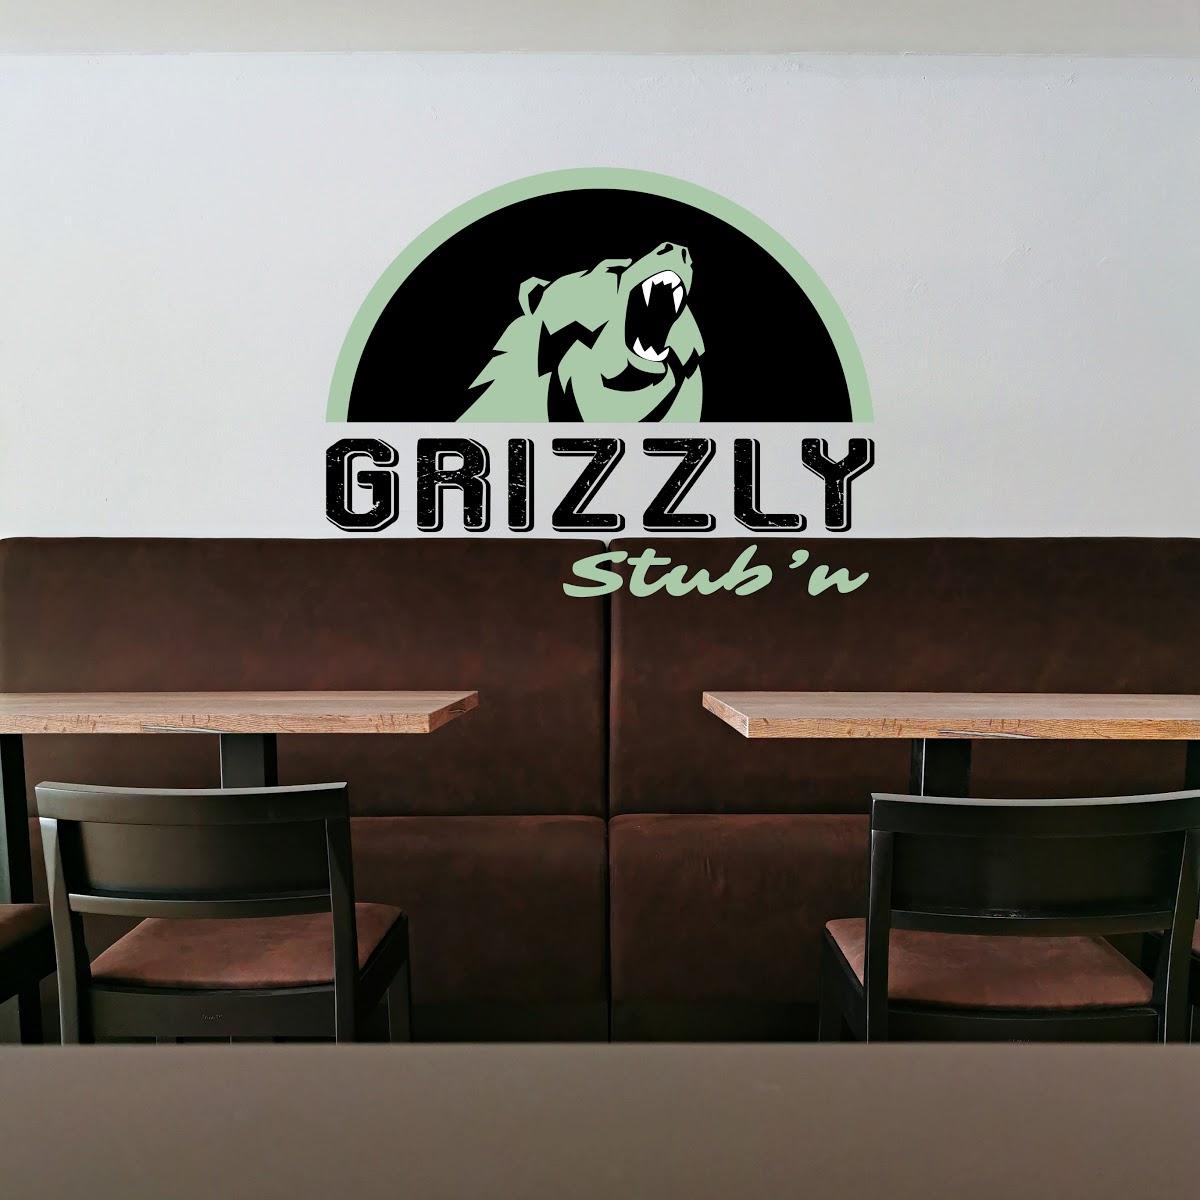 Restaurant "Grizzly Stub